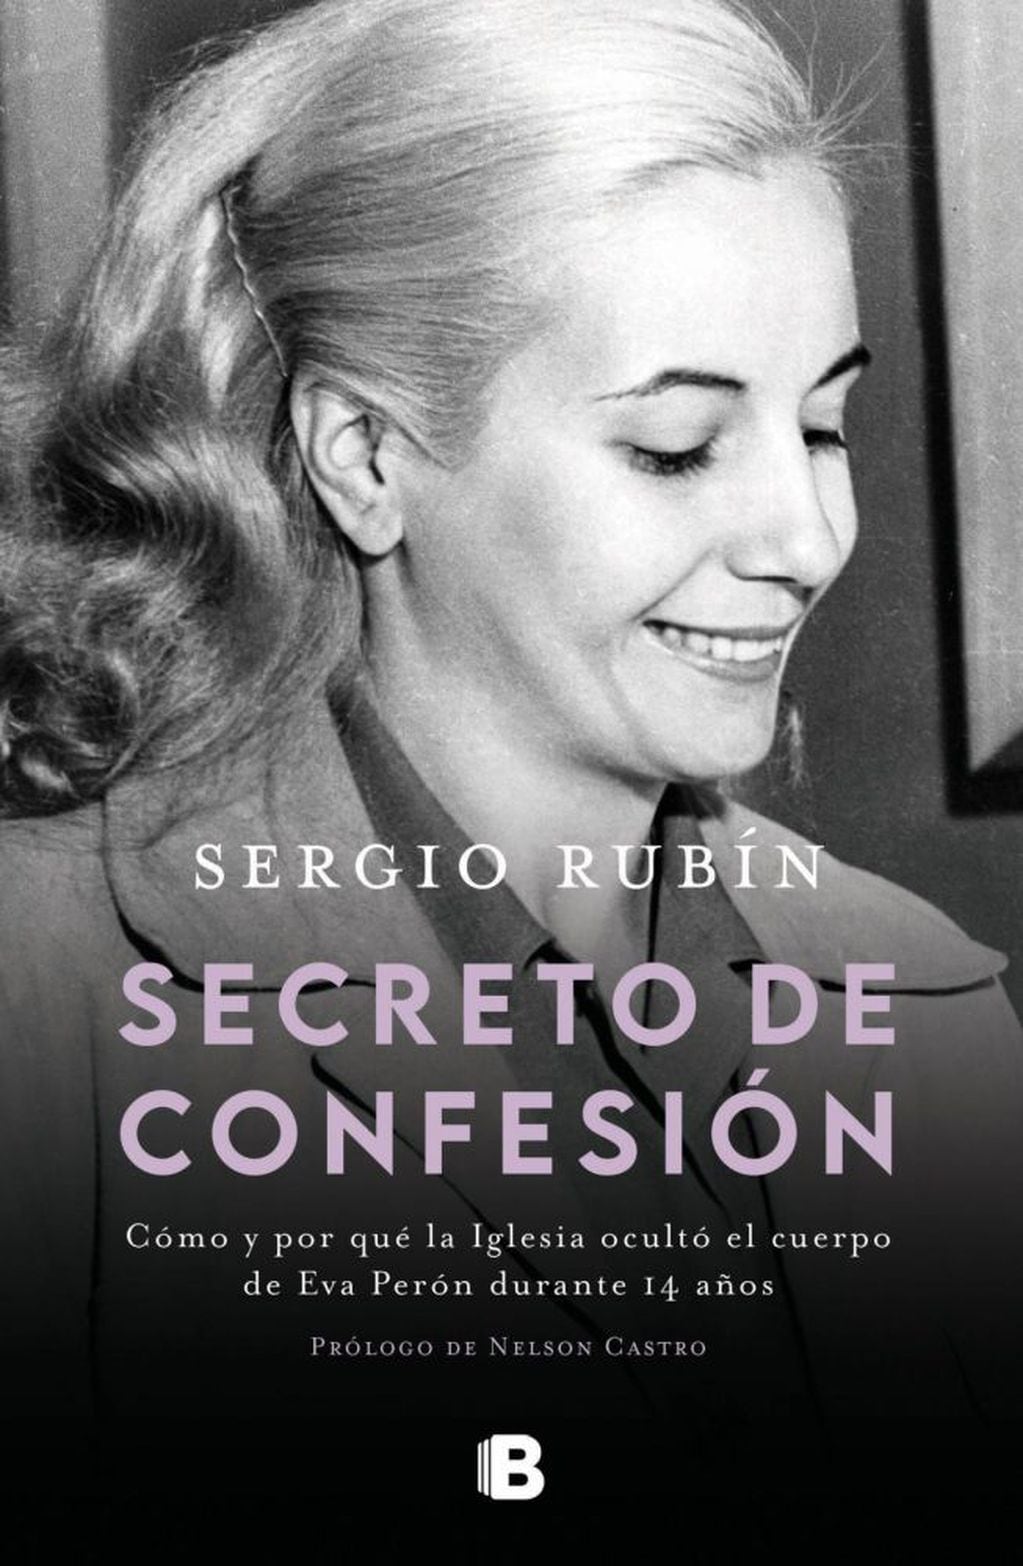 "Secreto de Confesión" de Sergio Rubín